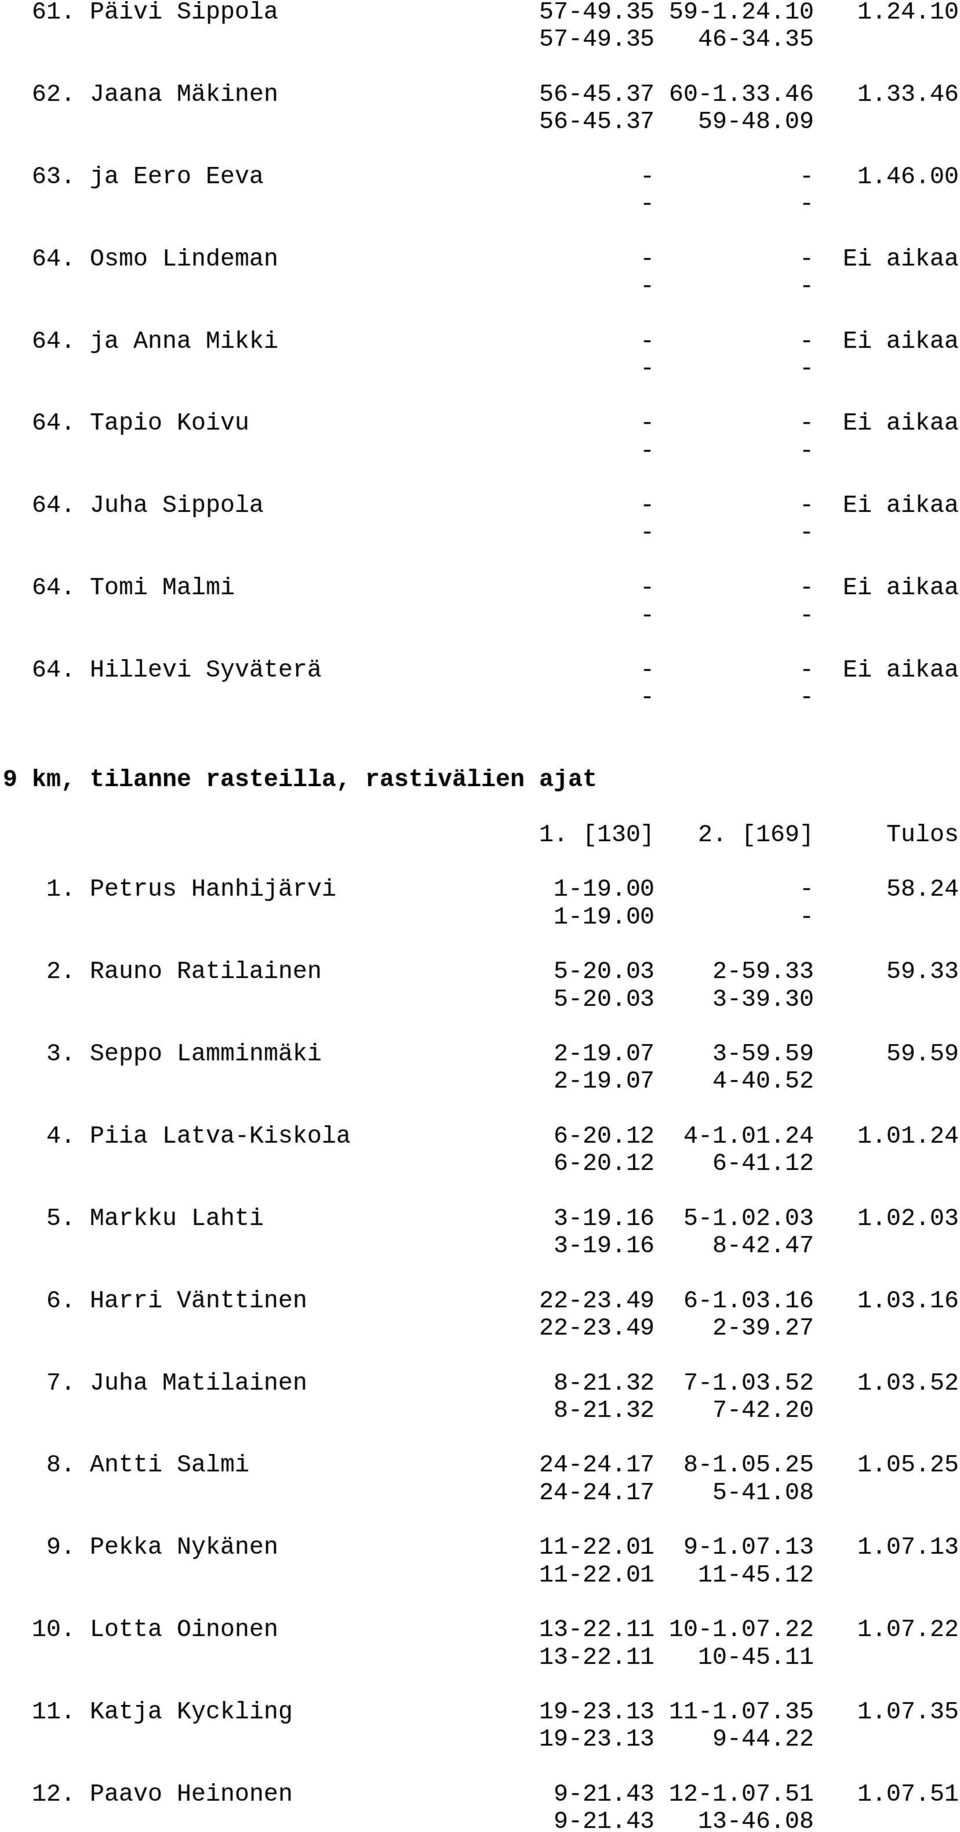 Petrus Hanhijärvi 1-19.00-58.24 1-19.00-2. Rauno Ratilainen 5-20.03 2-59.33 59.33 5-20.03 3-39.30 3. Seppo Lamminmäki 2-19.07 3-59.59 59.59 2-19.07 4-40.52 4. Piia Latva-Kiskola 6-20.12 4-1.01.